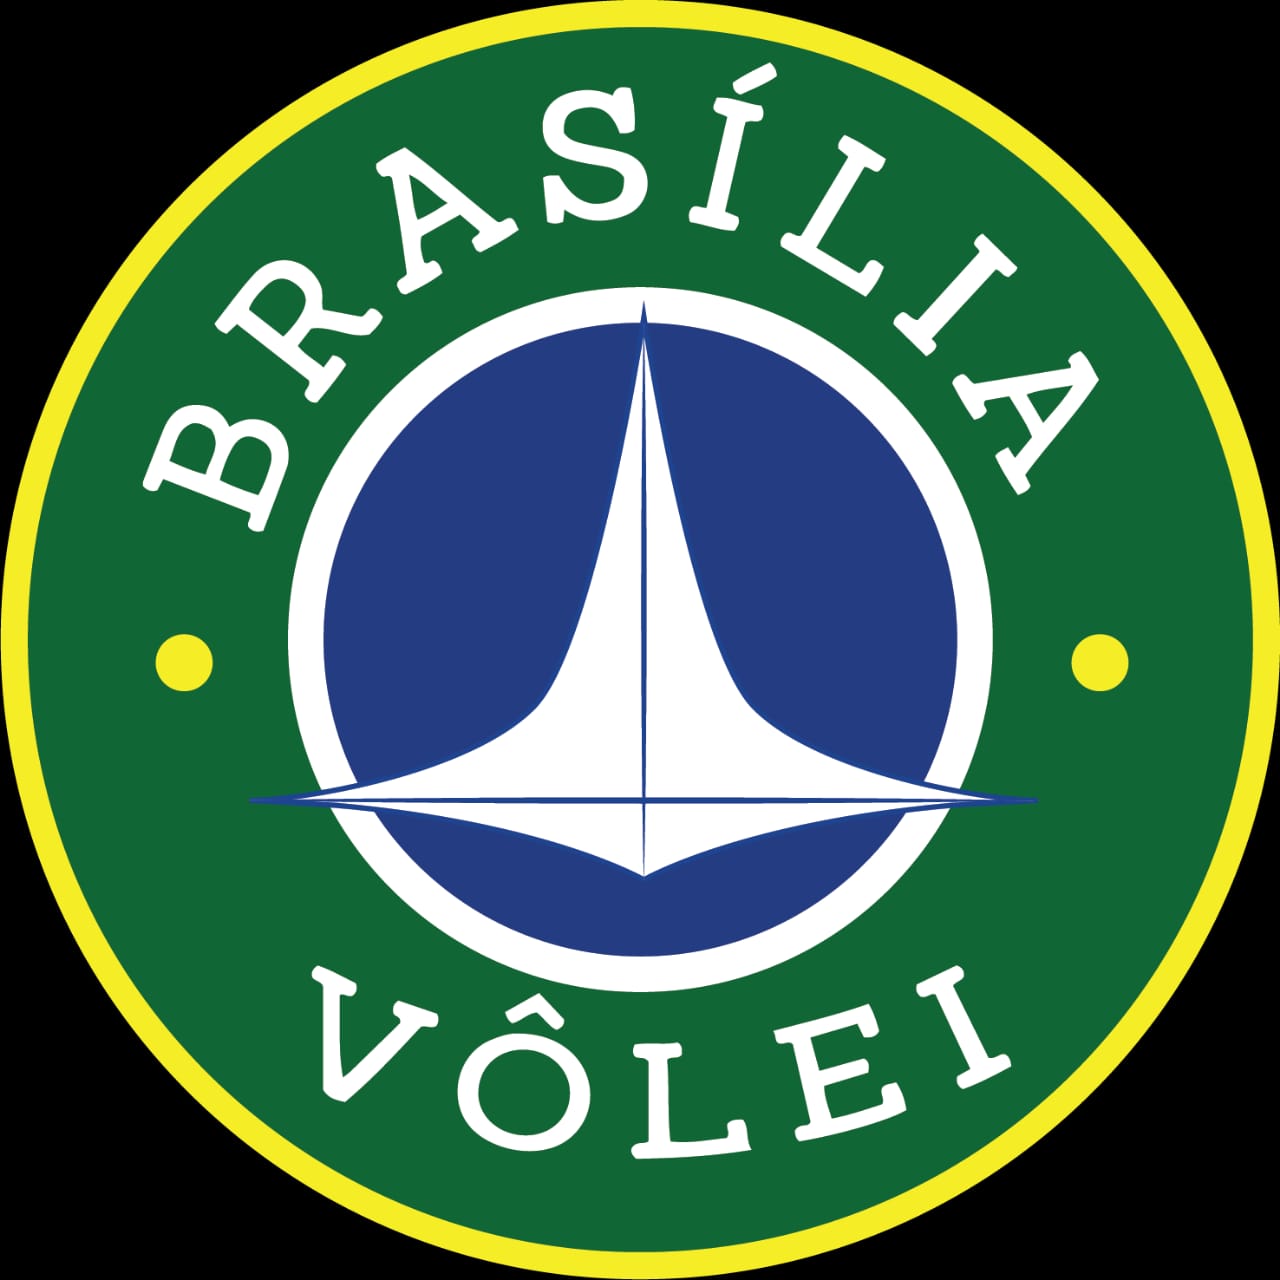 BRASILIA VOLEI ESPORTE CLUBE - BVEC